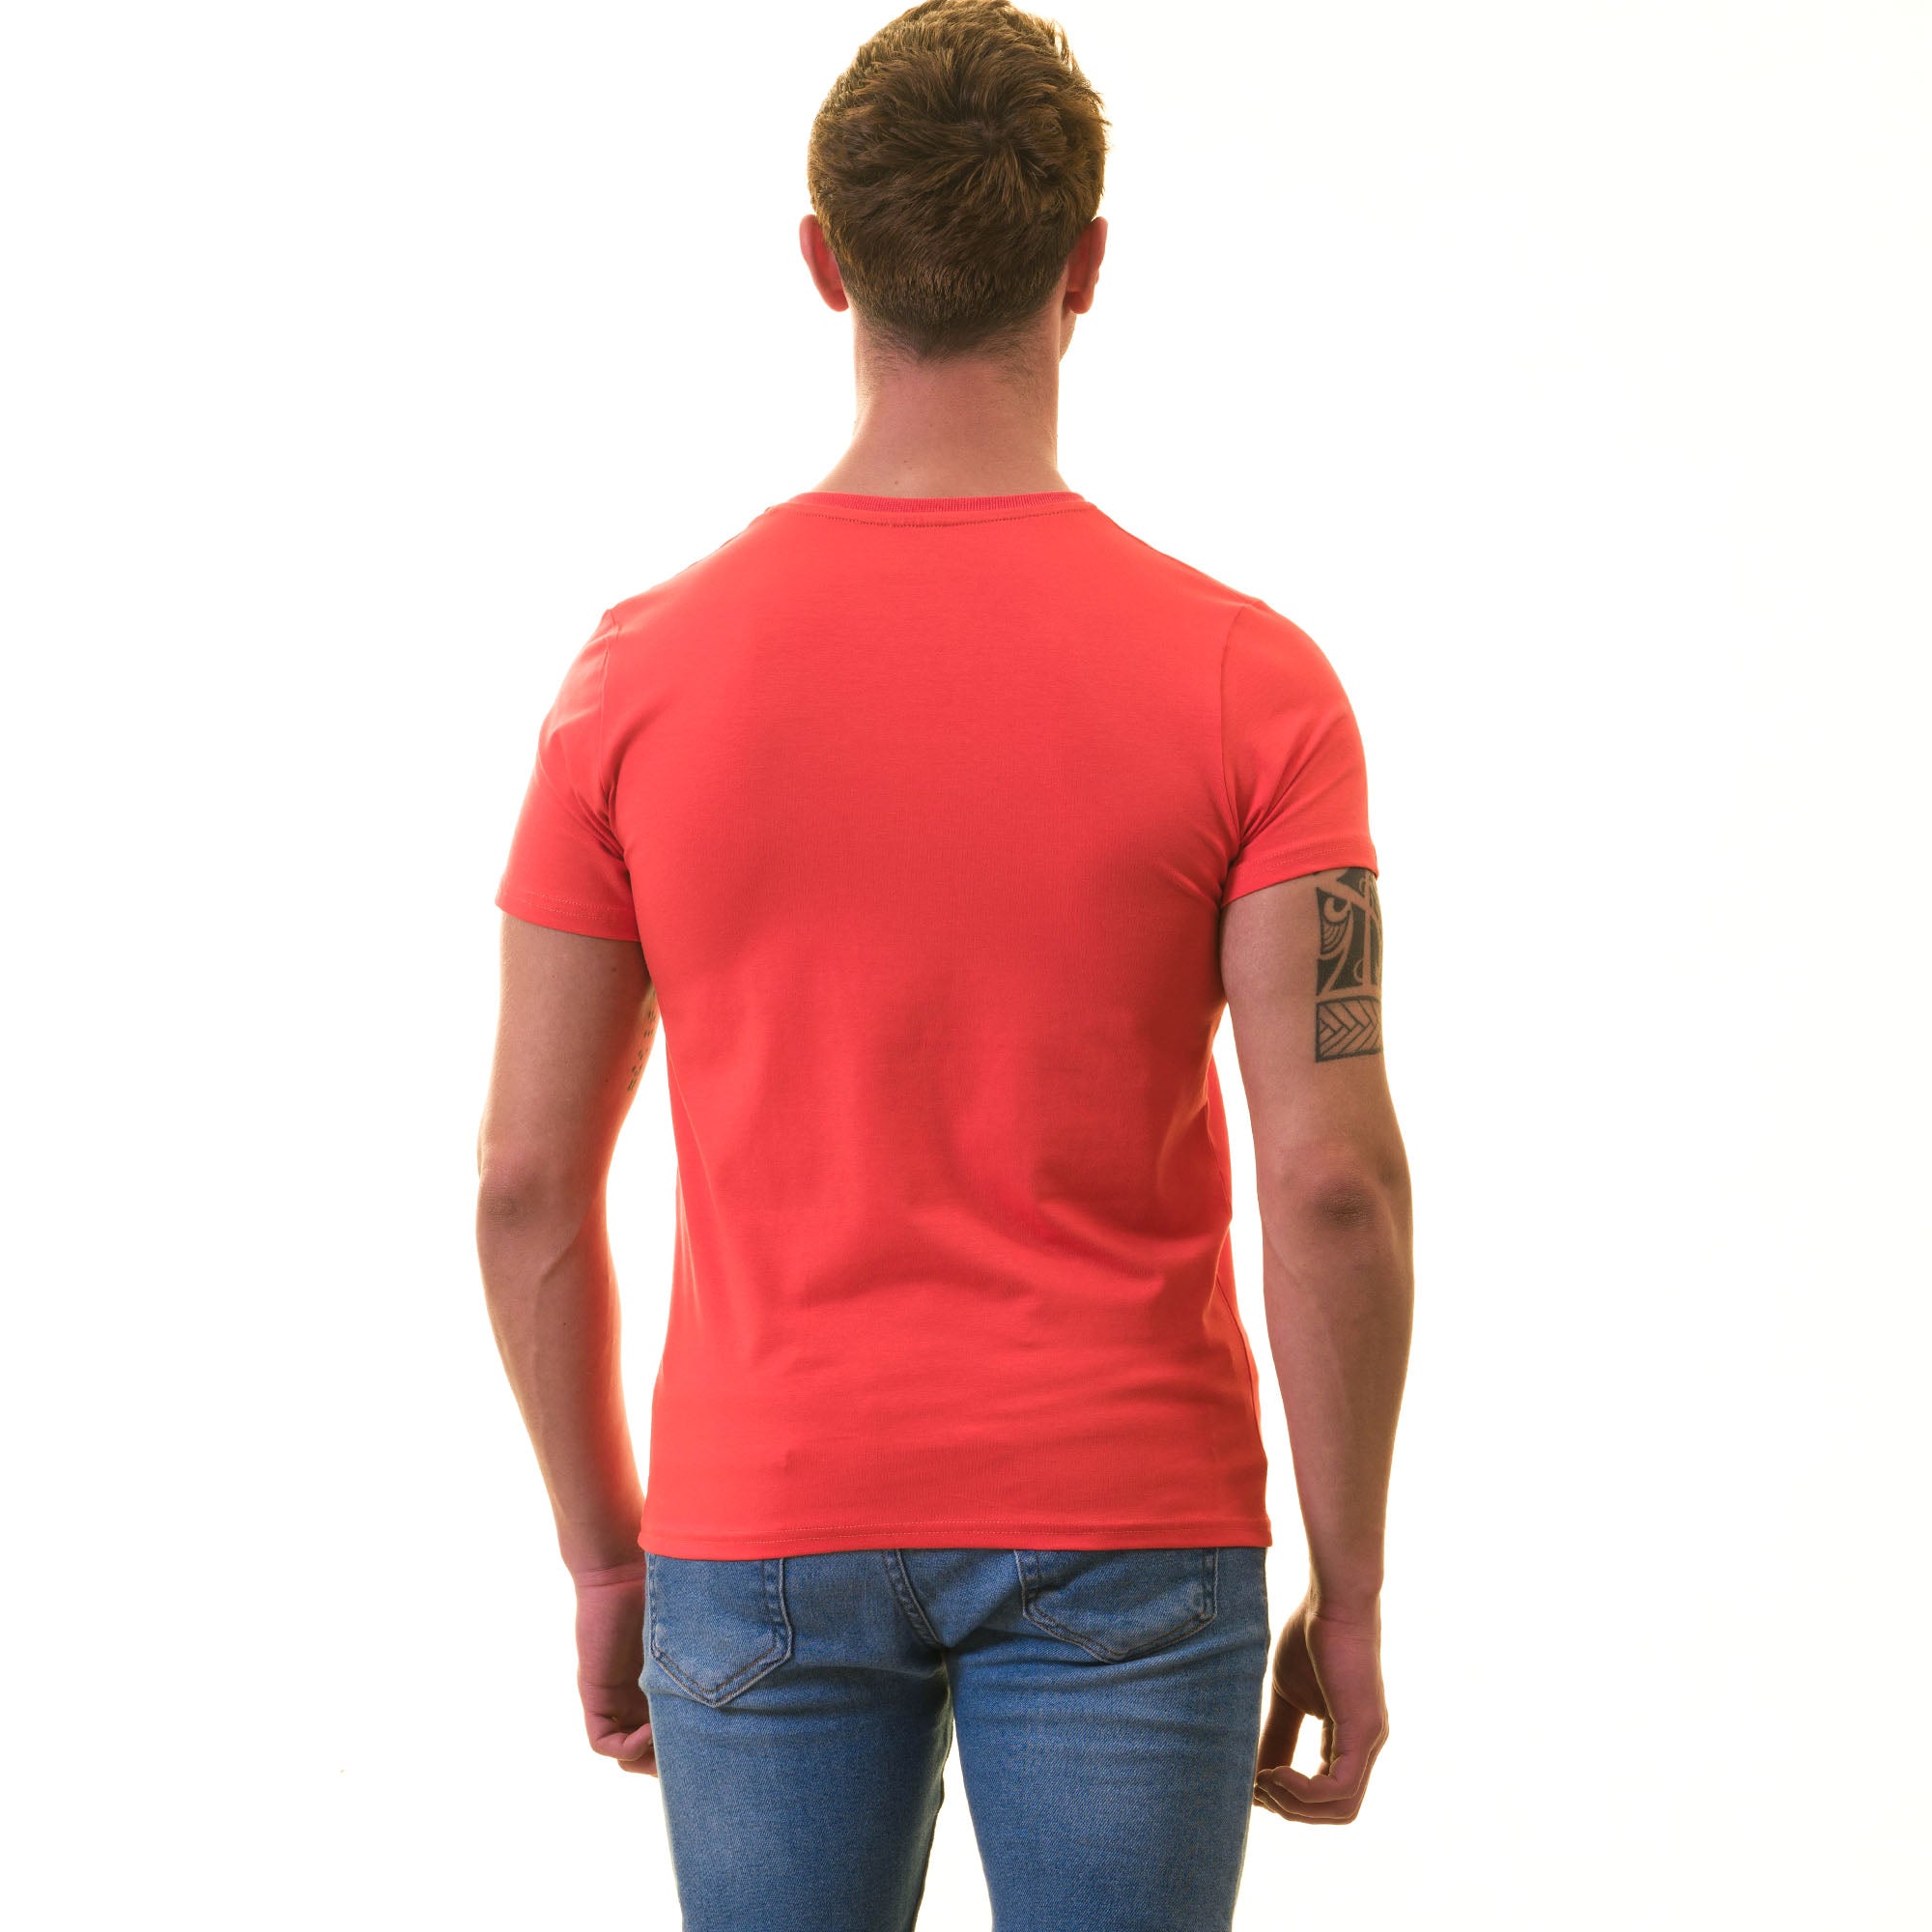 Orange European Made & Designed Premium Quality T-Shirt - Crew Neck Short Sleeve T-Shirts